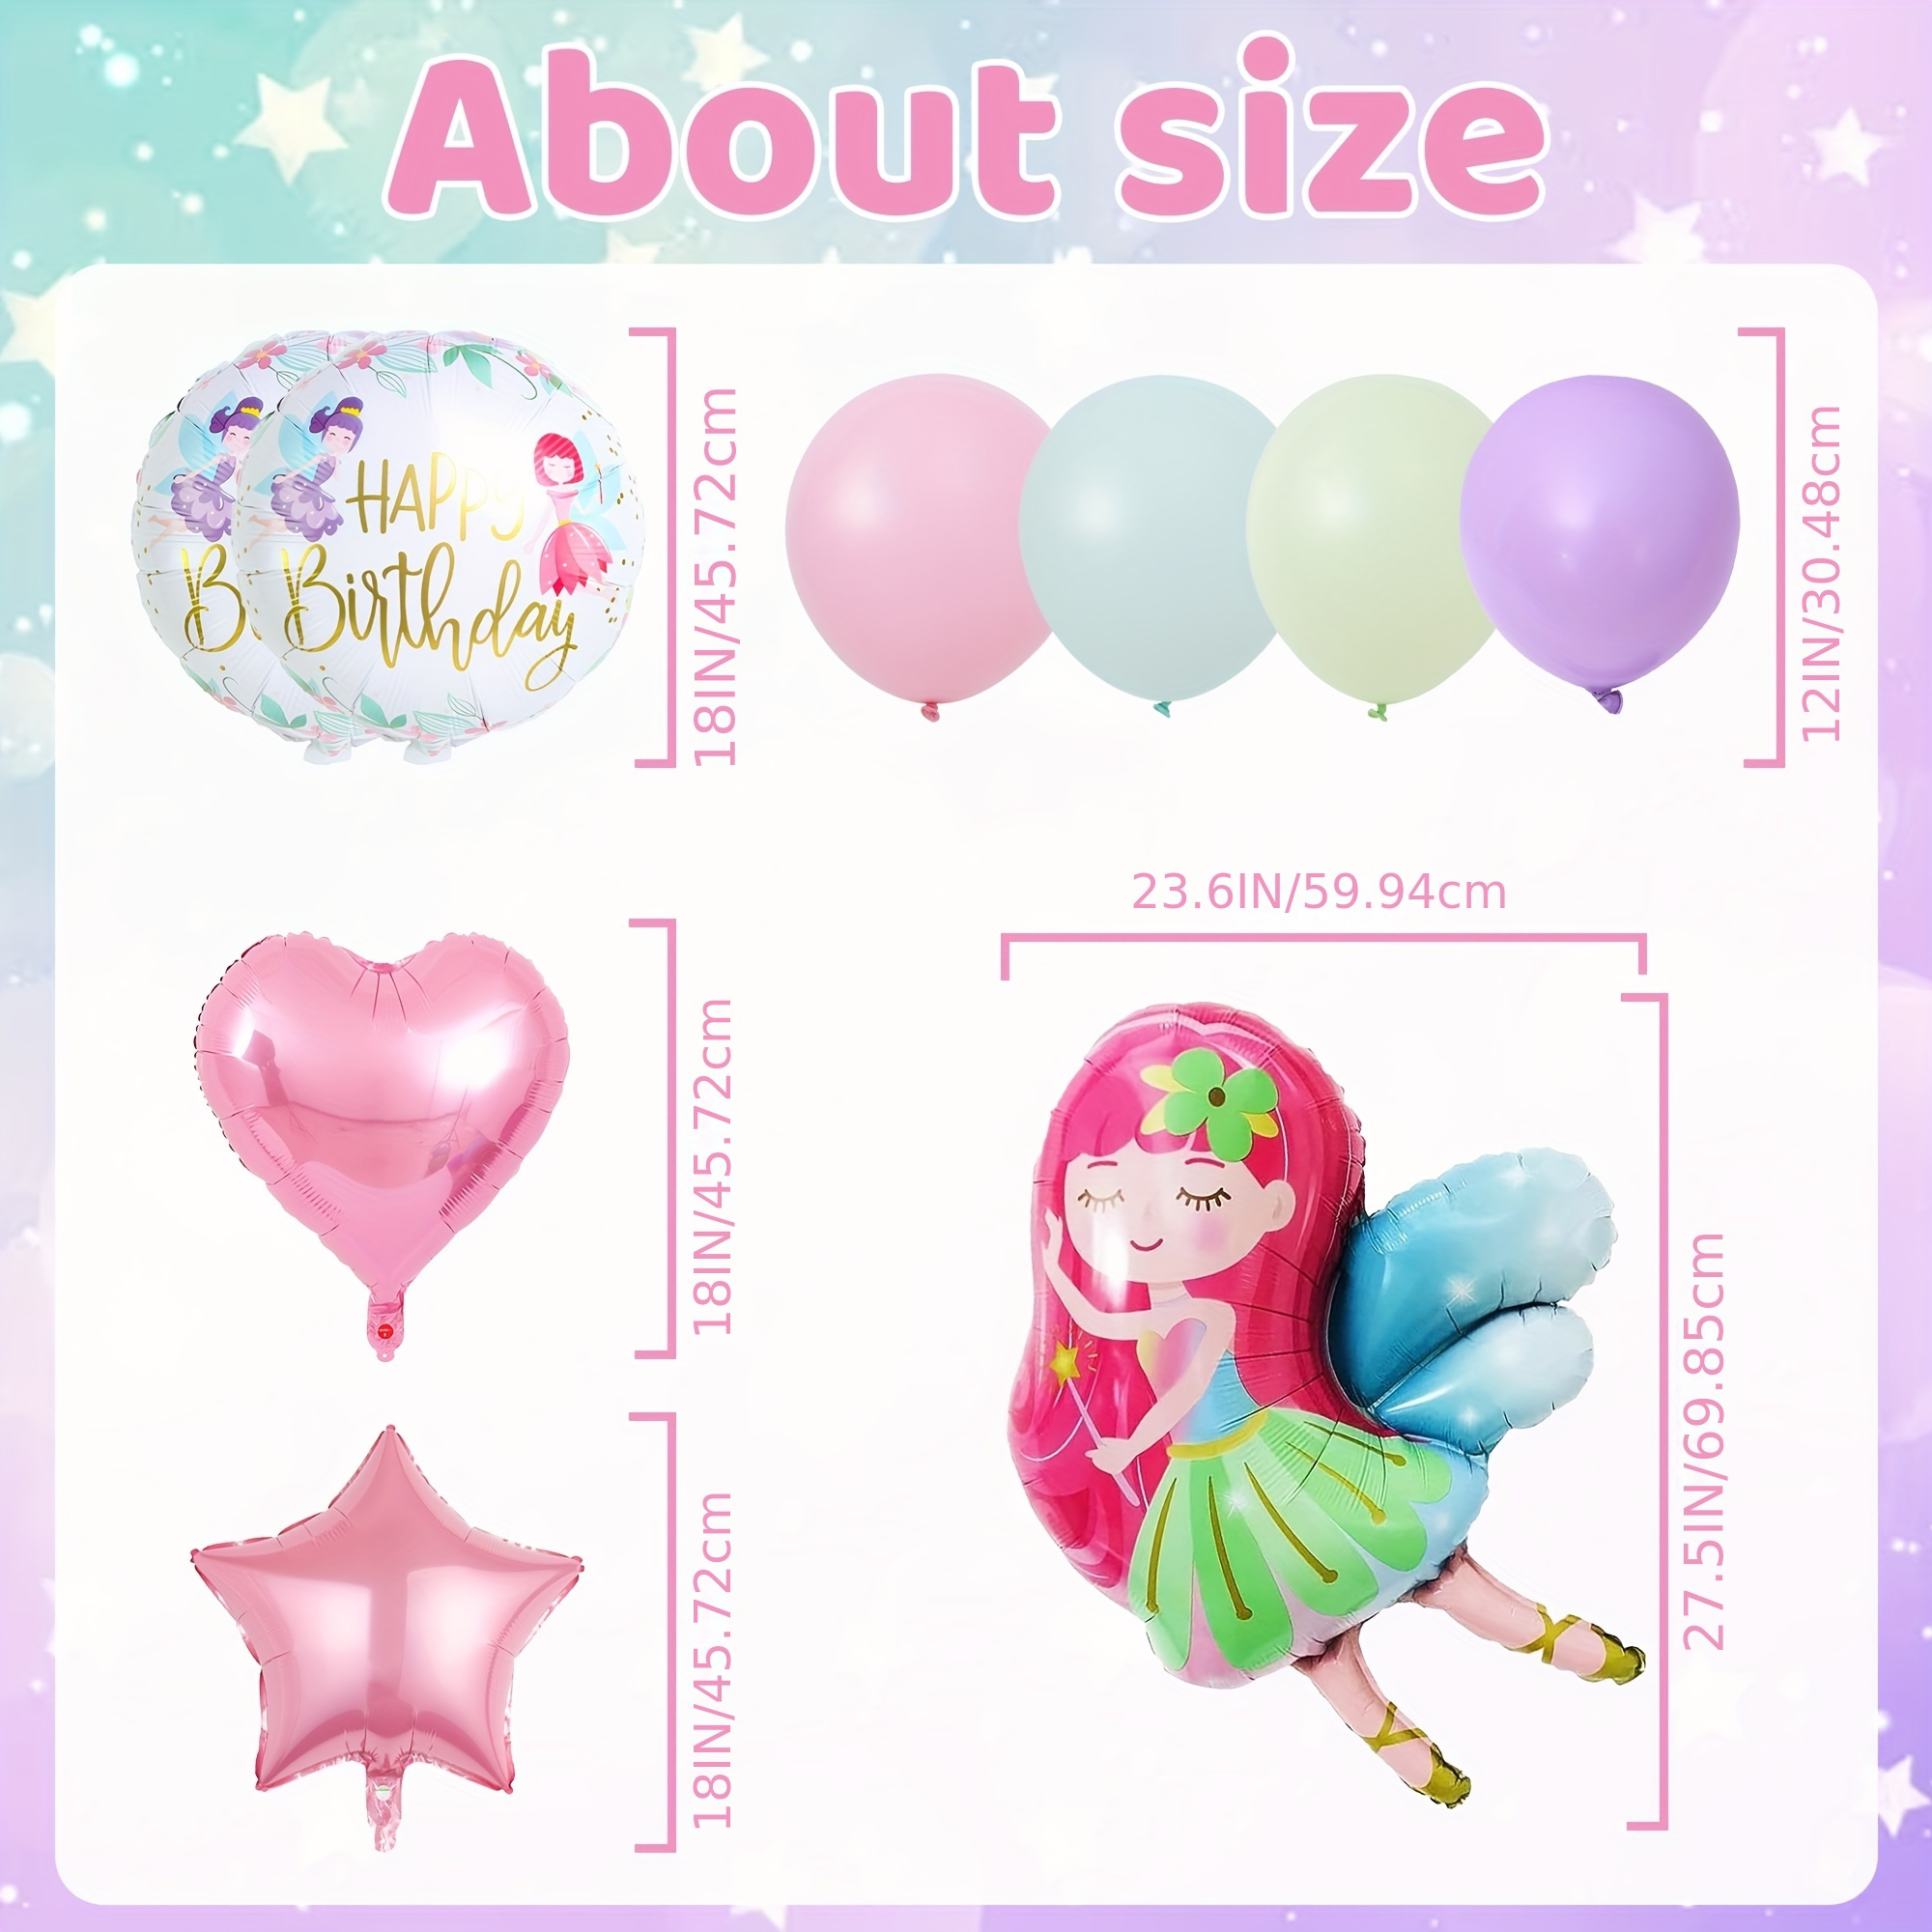 Princess Party Theme Supplies & Decorations